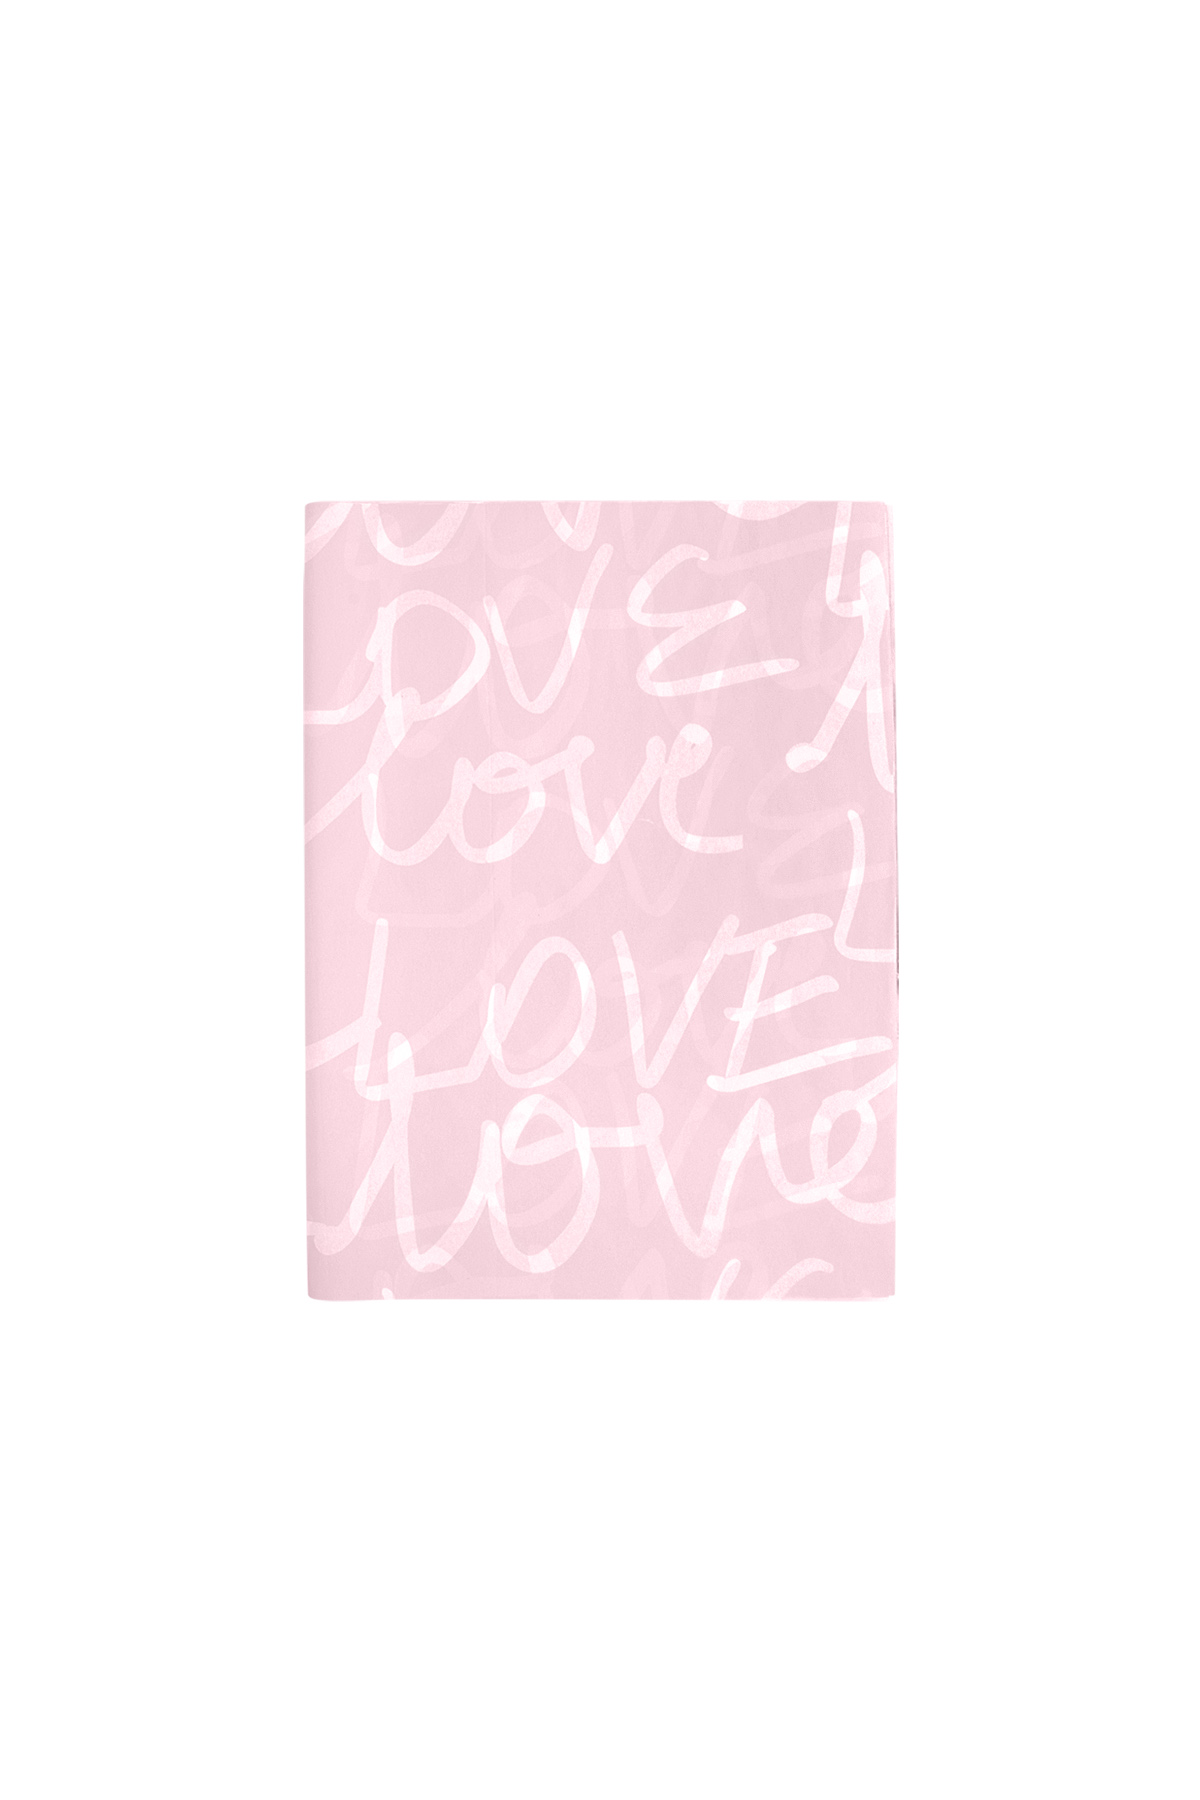 Rolling paper portrait love - pink Paper